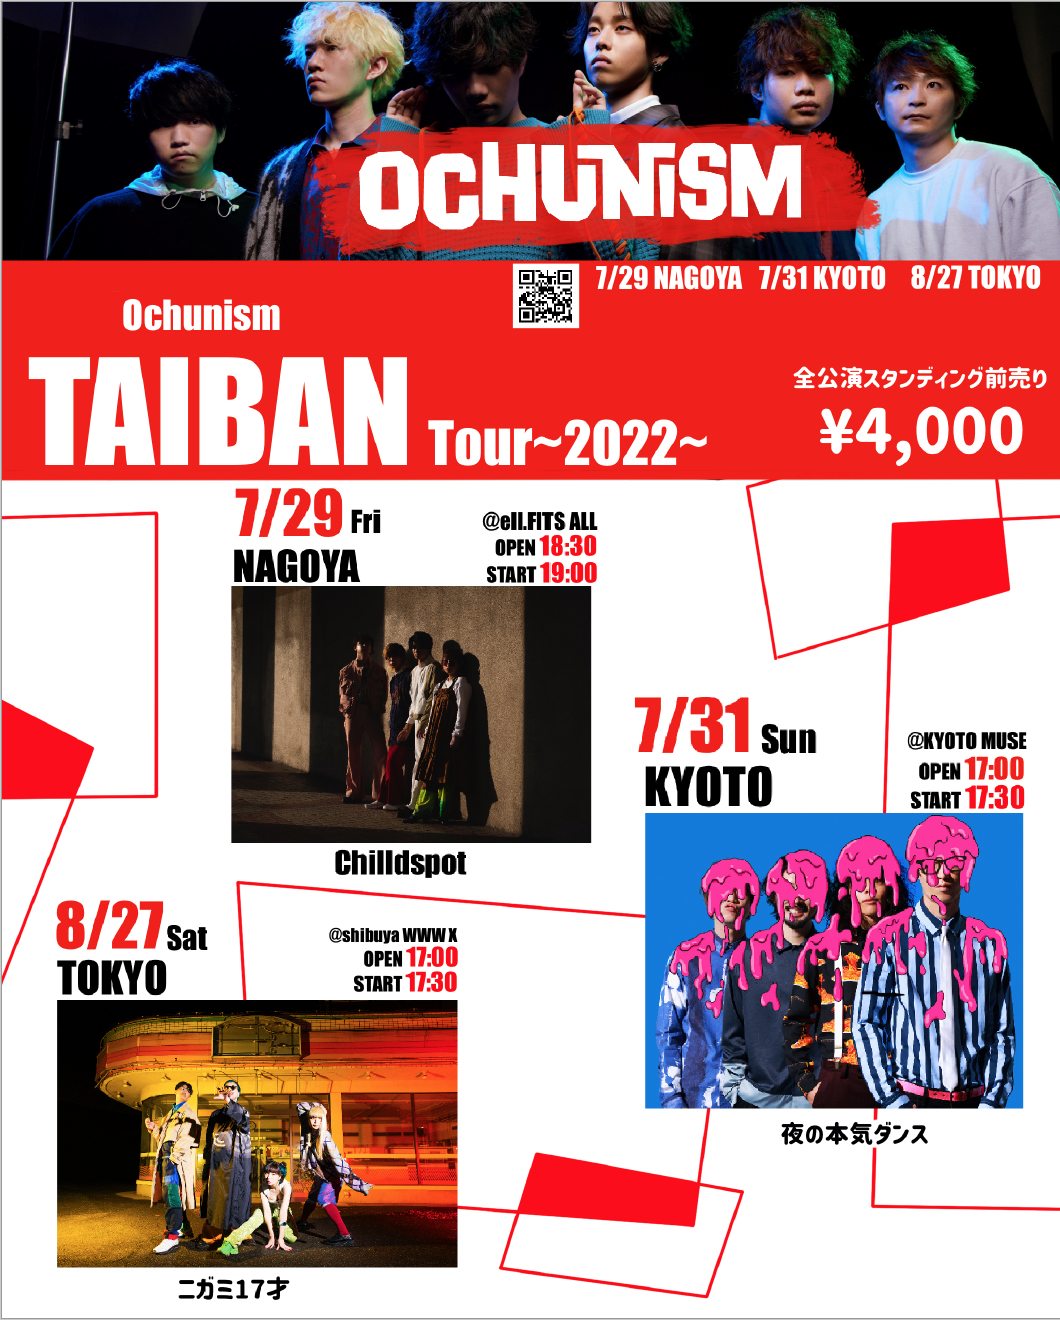 Ochunism TAIBAN TOUR 2022